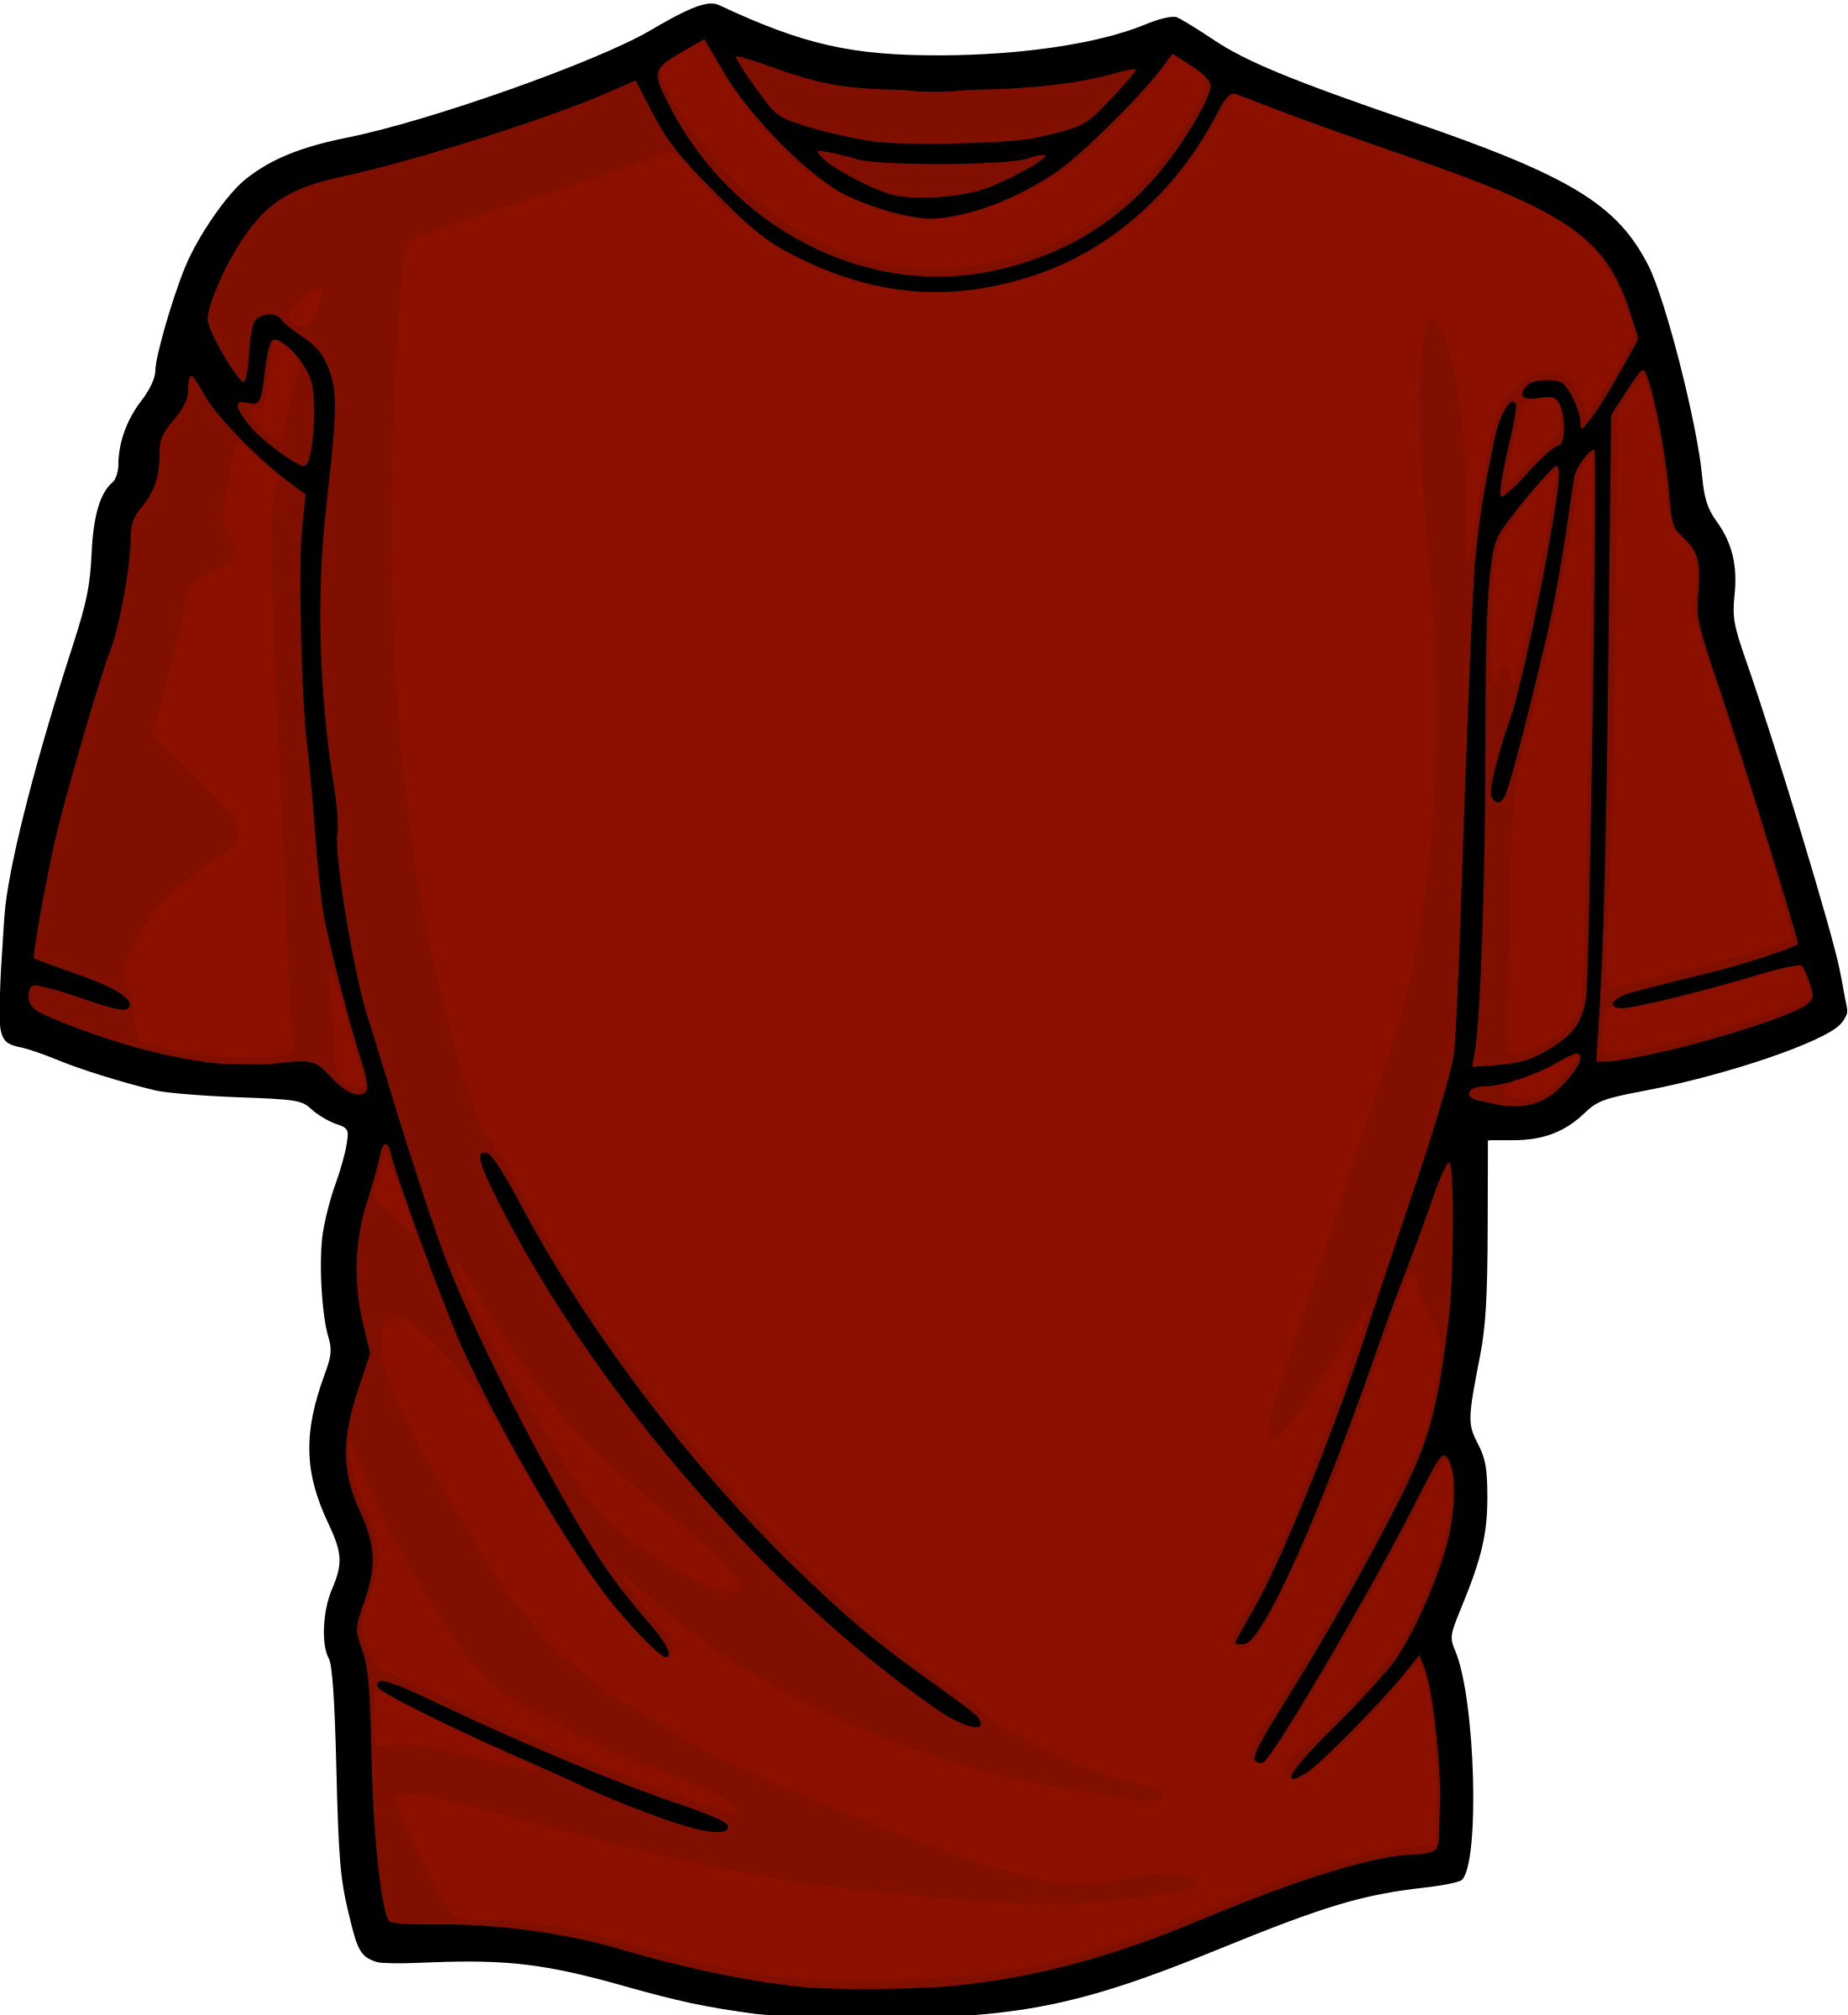 T big image png. Shirt clipart red shirt